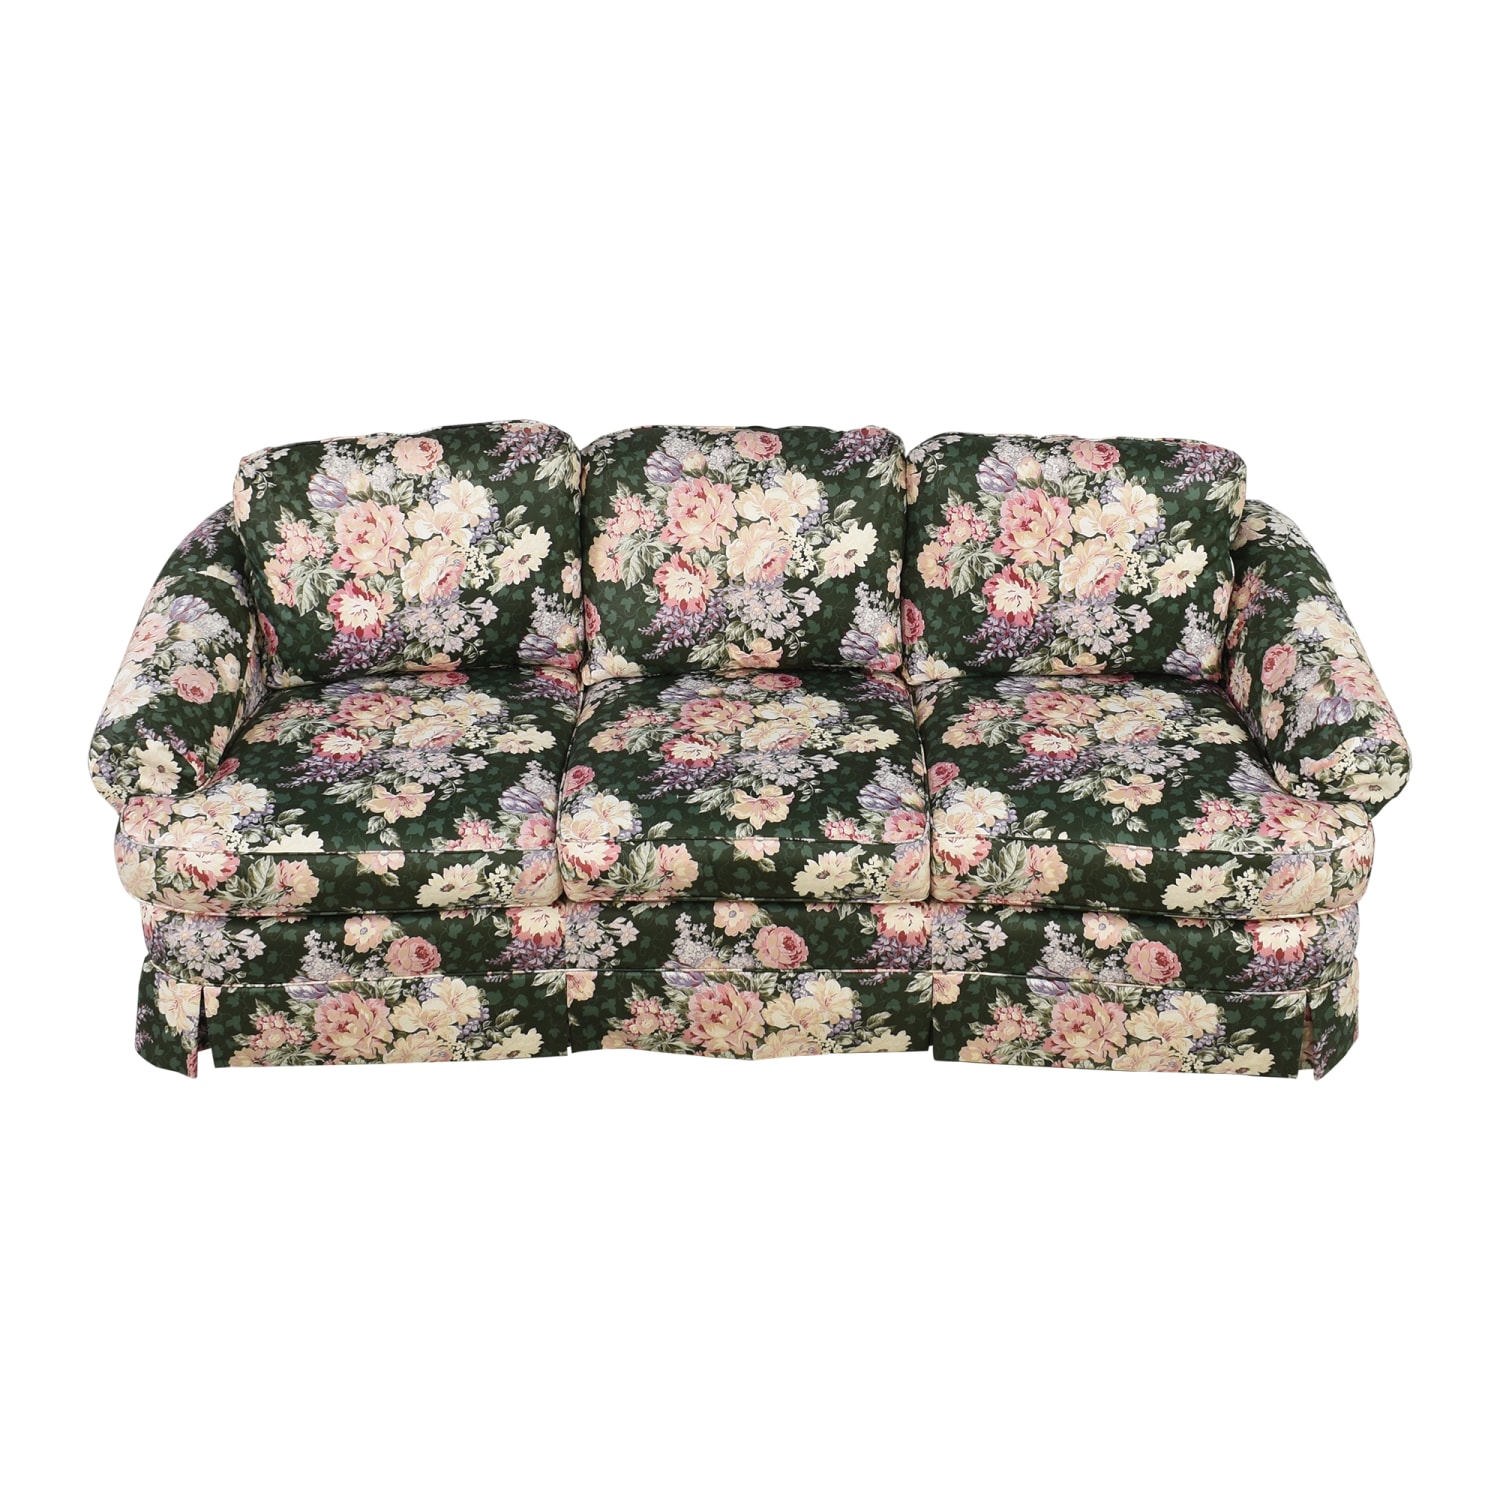 CR Laine CR Laine Floral Upholstered Sofa  multi